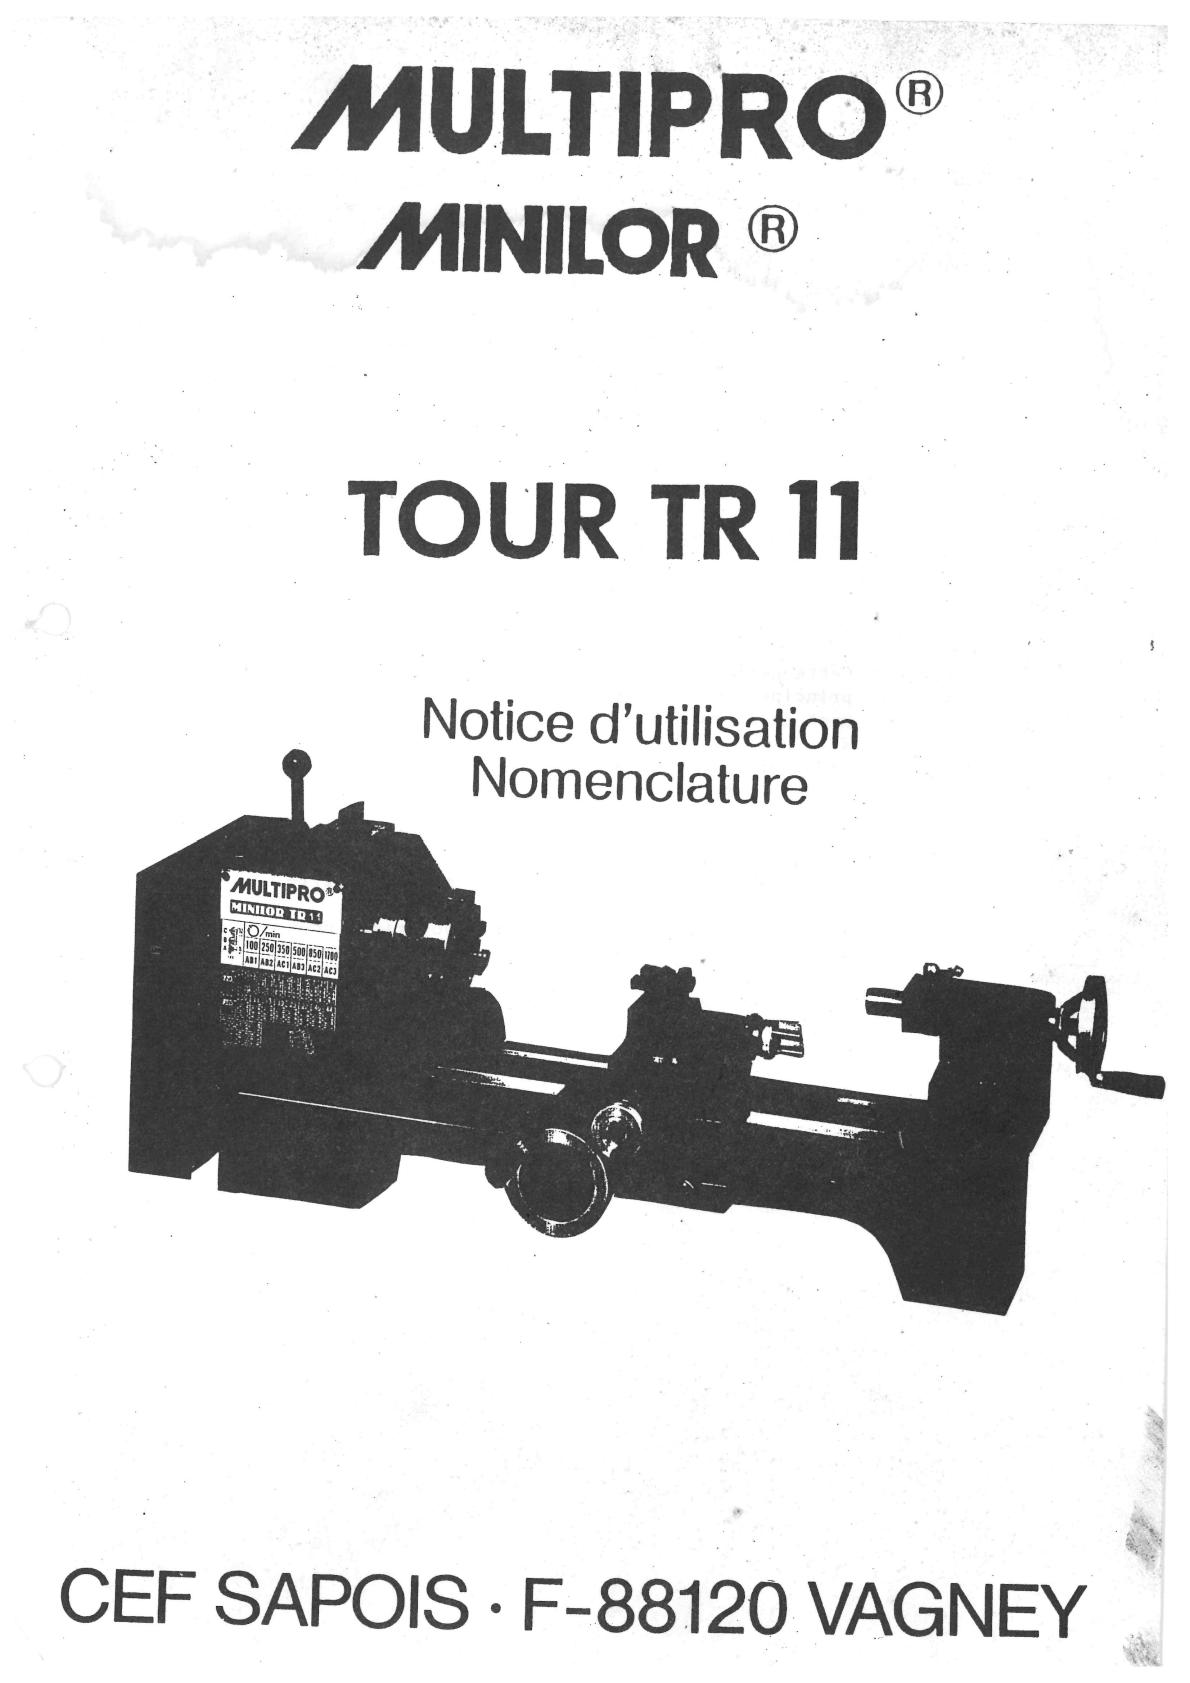 Multipro Minilor TR 11 Uw1175